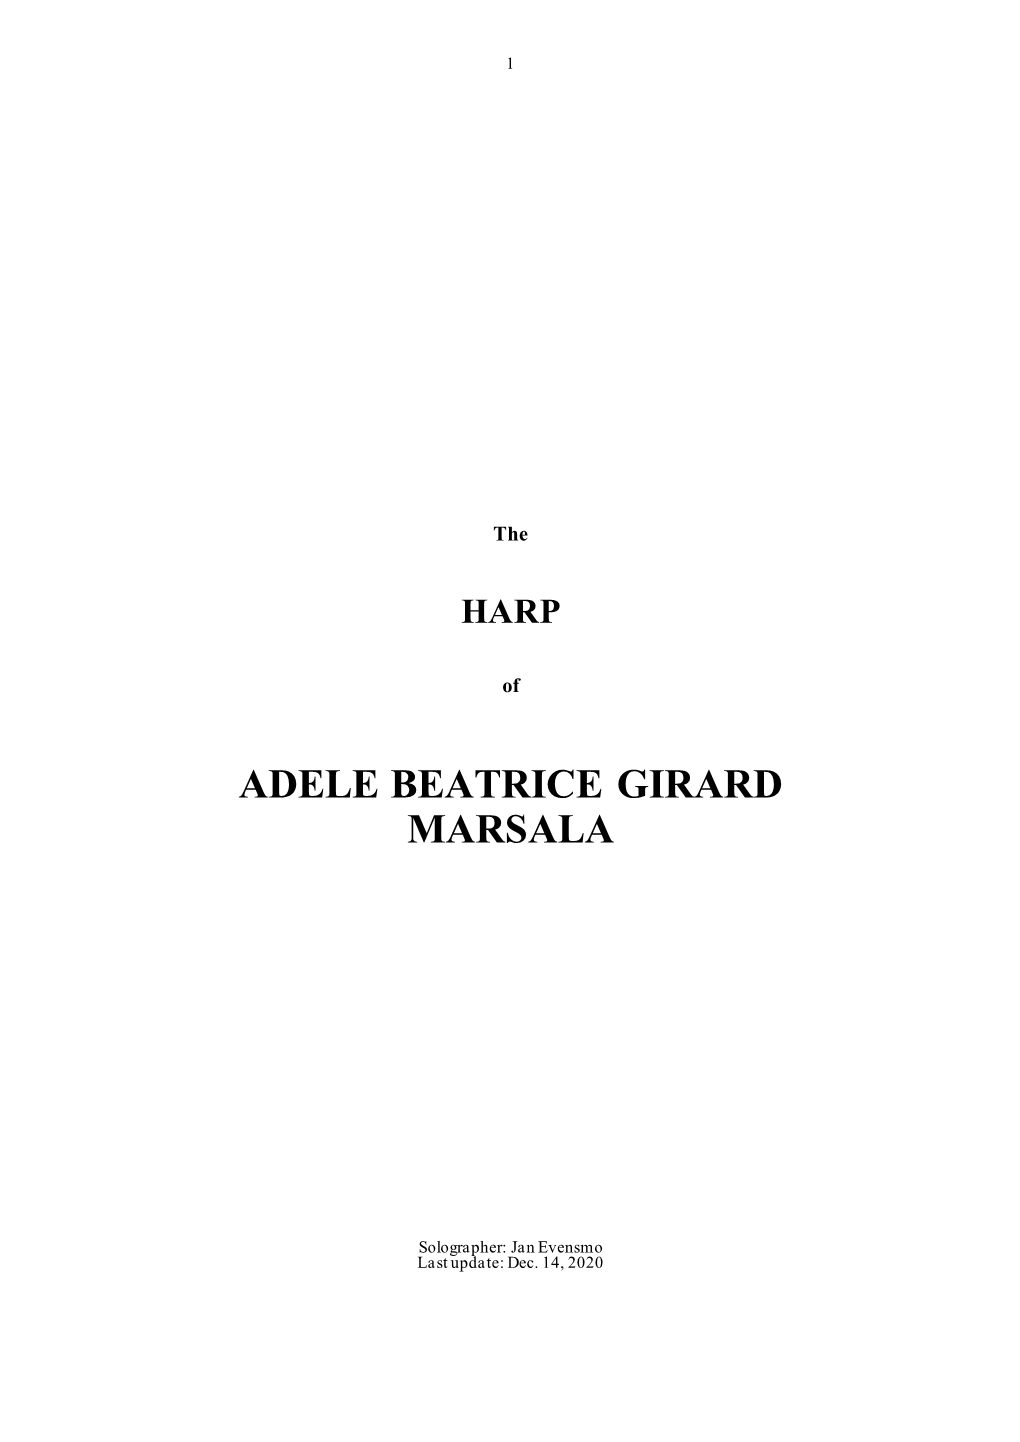 Download the Harp of Adele Girard